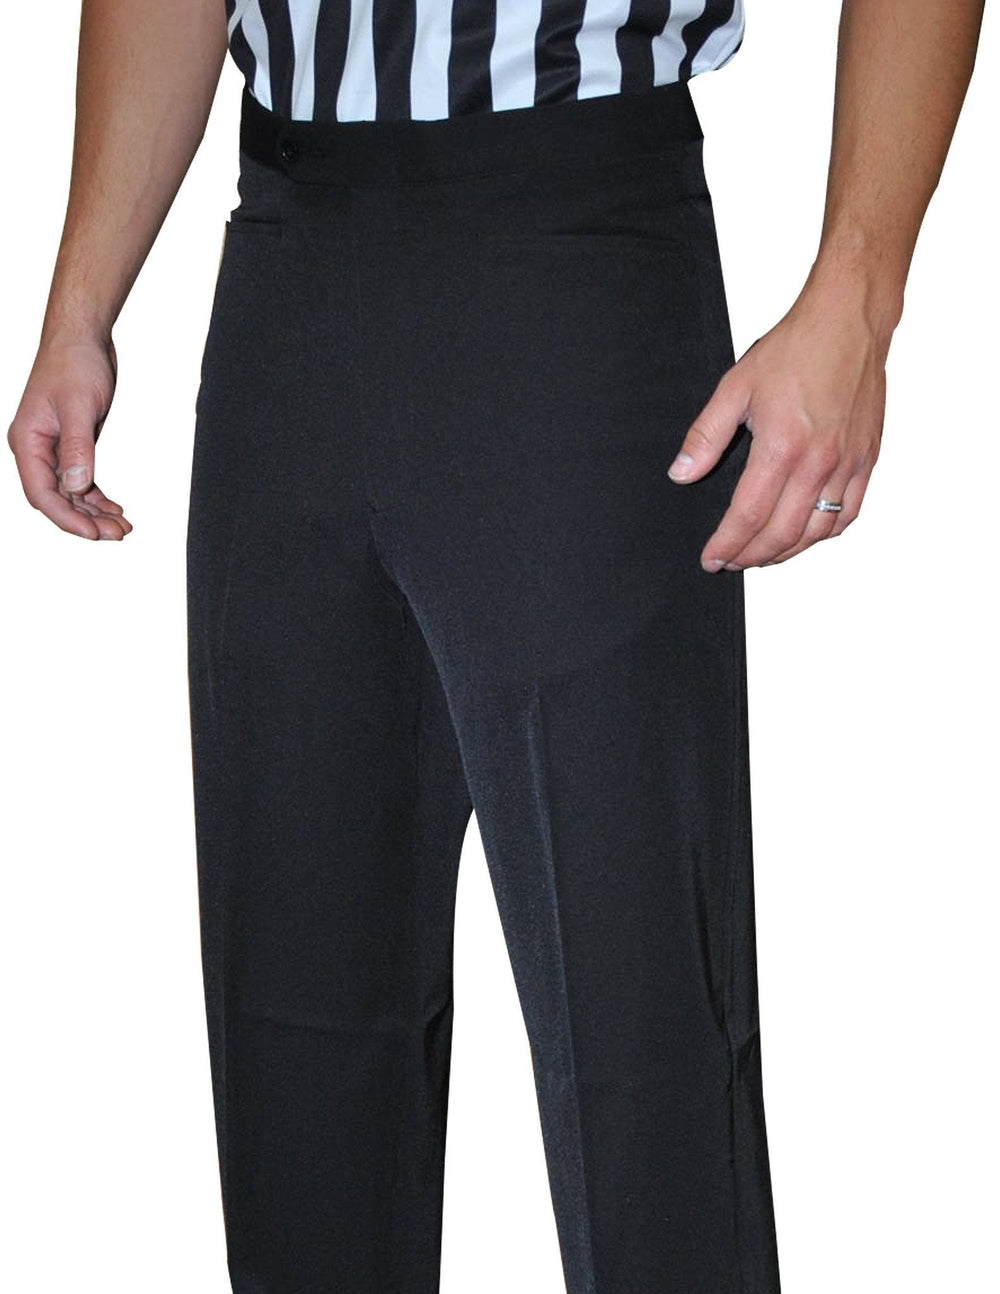 Smitty 4-Way Stretch Black Flat Front Pants w/ Western Cut Pockets